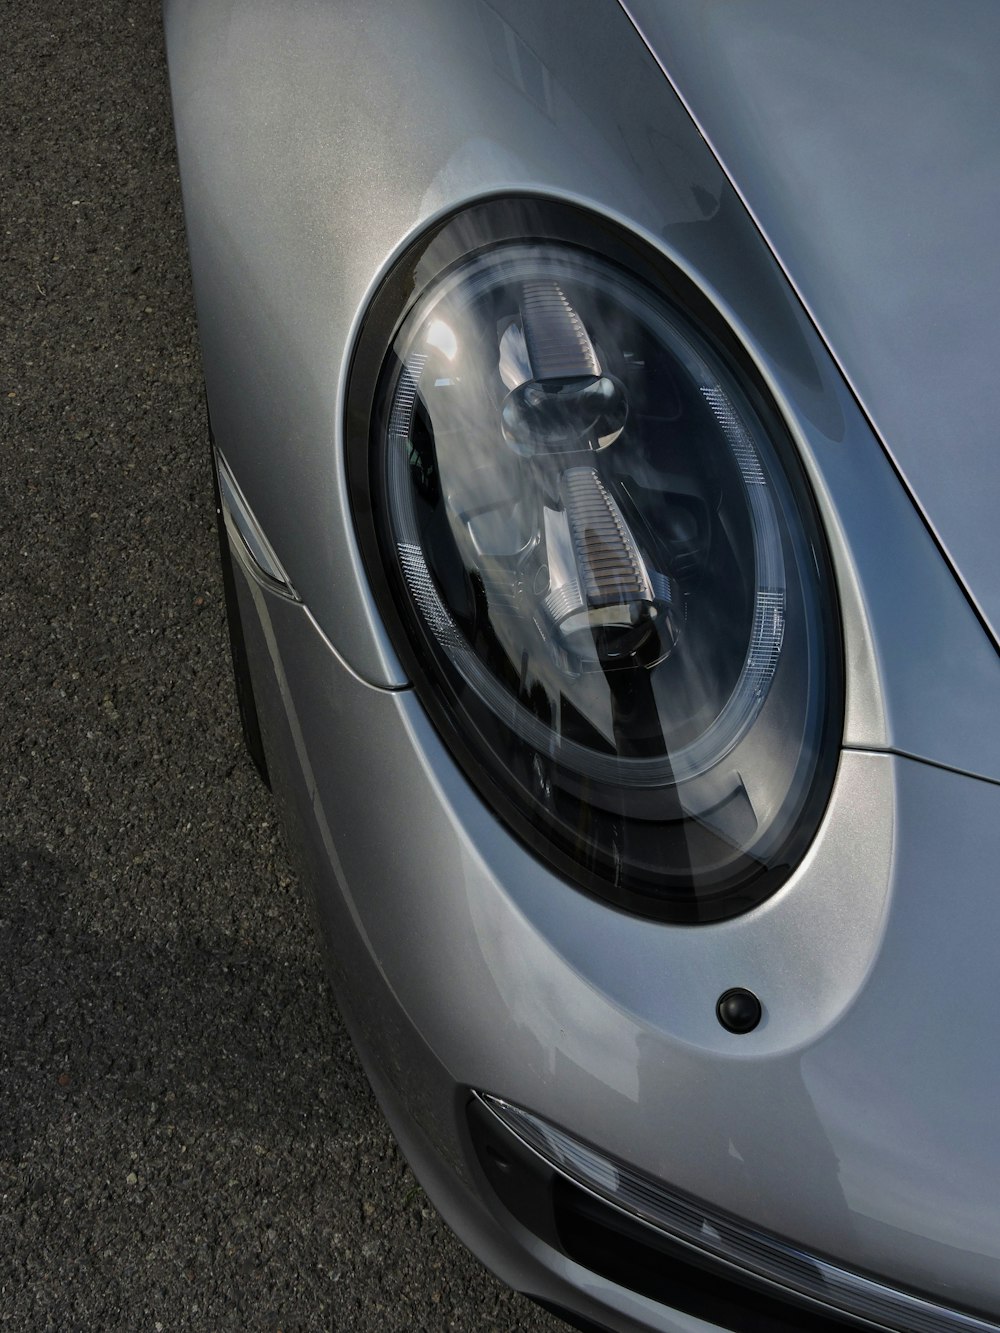 a close up of a silver sports car headlight